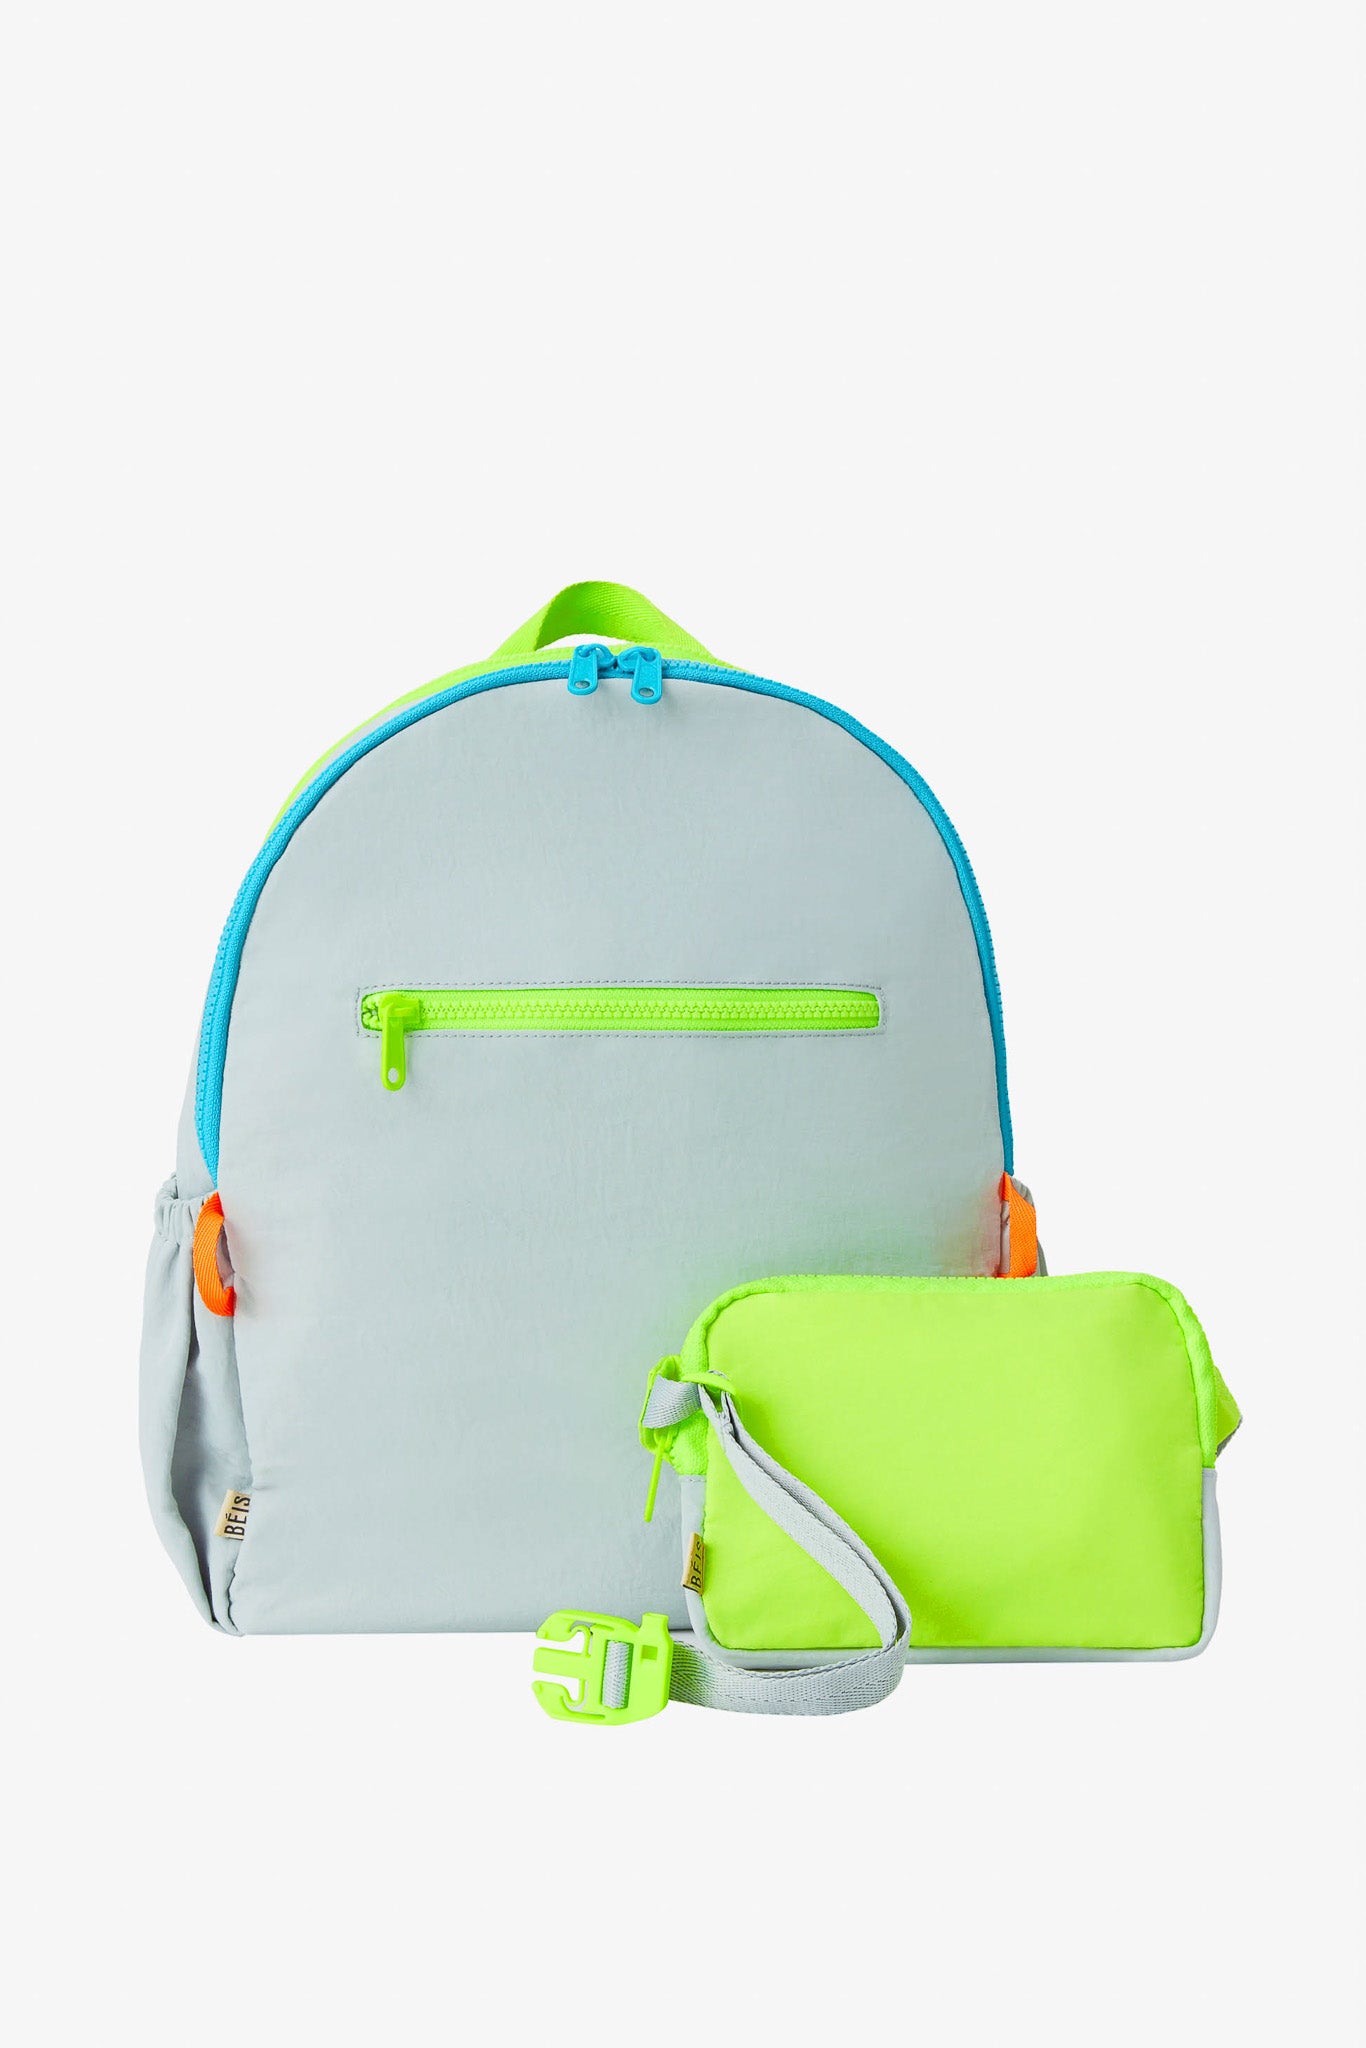 BÉIS 'The Kids Backpack' in Slate - Best Travel Backpack for Kids in Blue